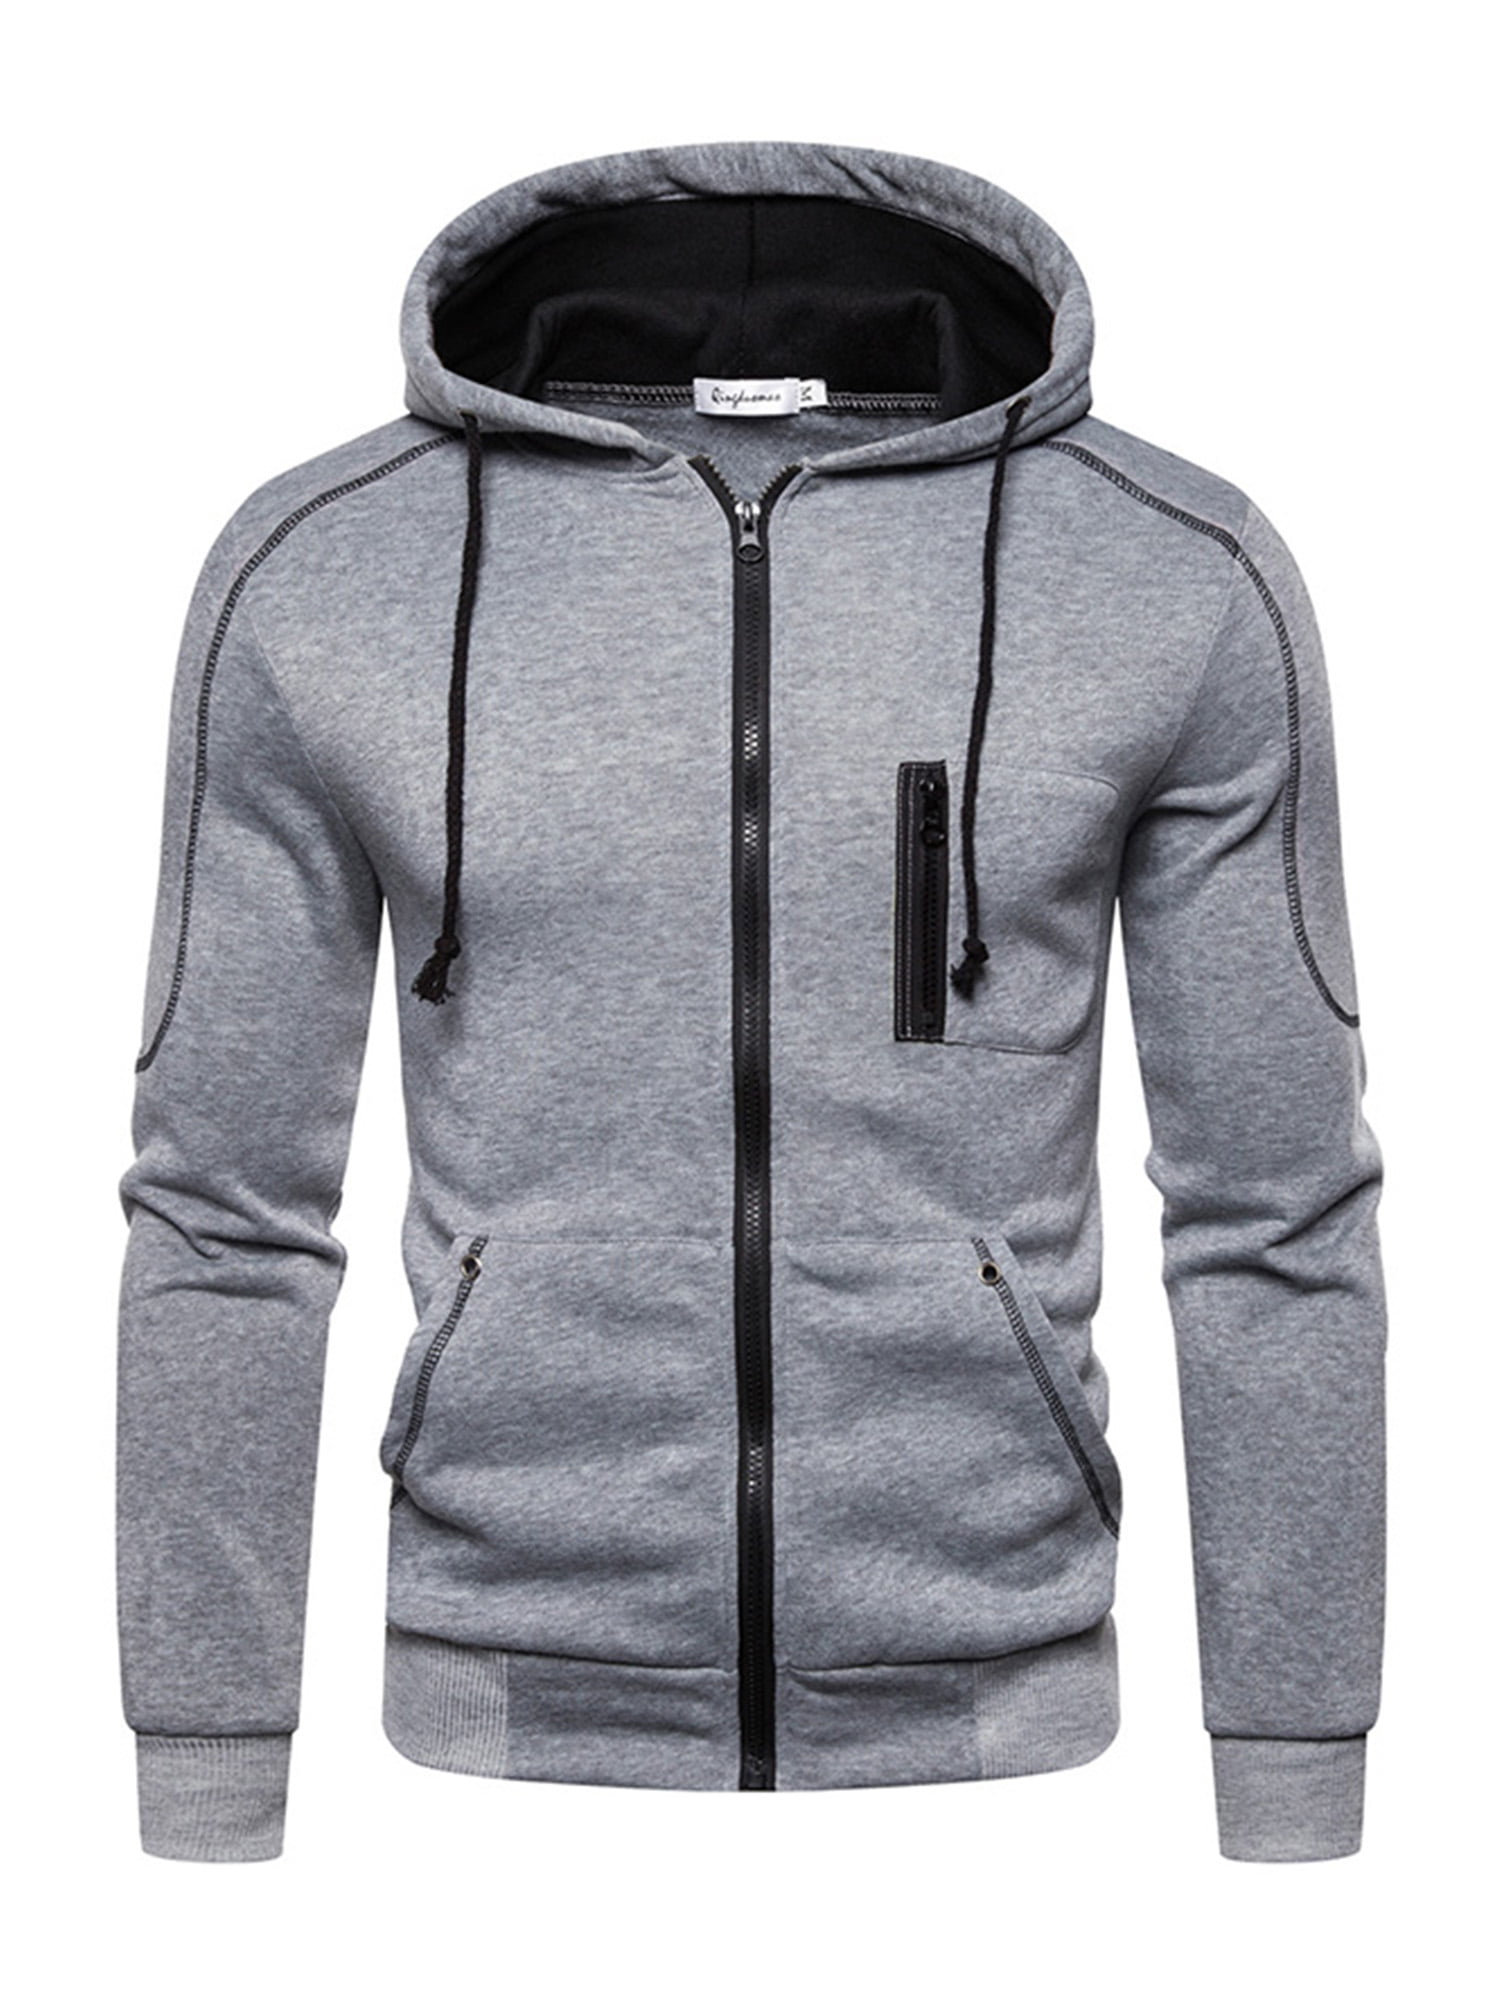 Men's Full Zip Up Hoodie Athletic slim Fit Long Sleeve Lightweight Fleece Sweatshirt With Kanga Pocket